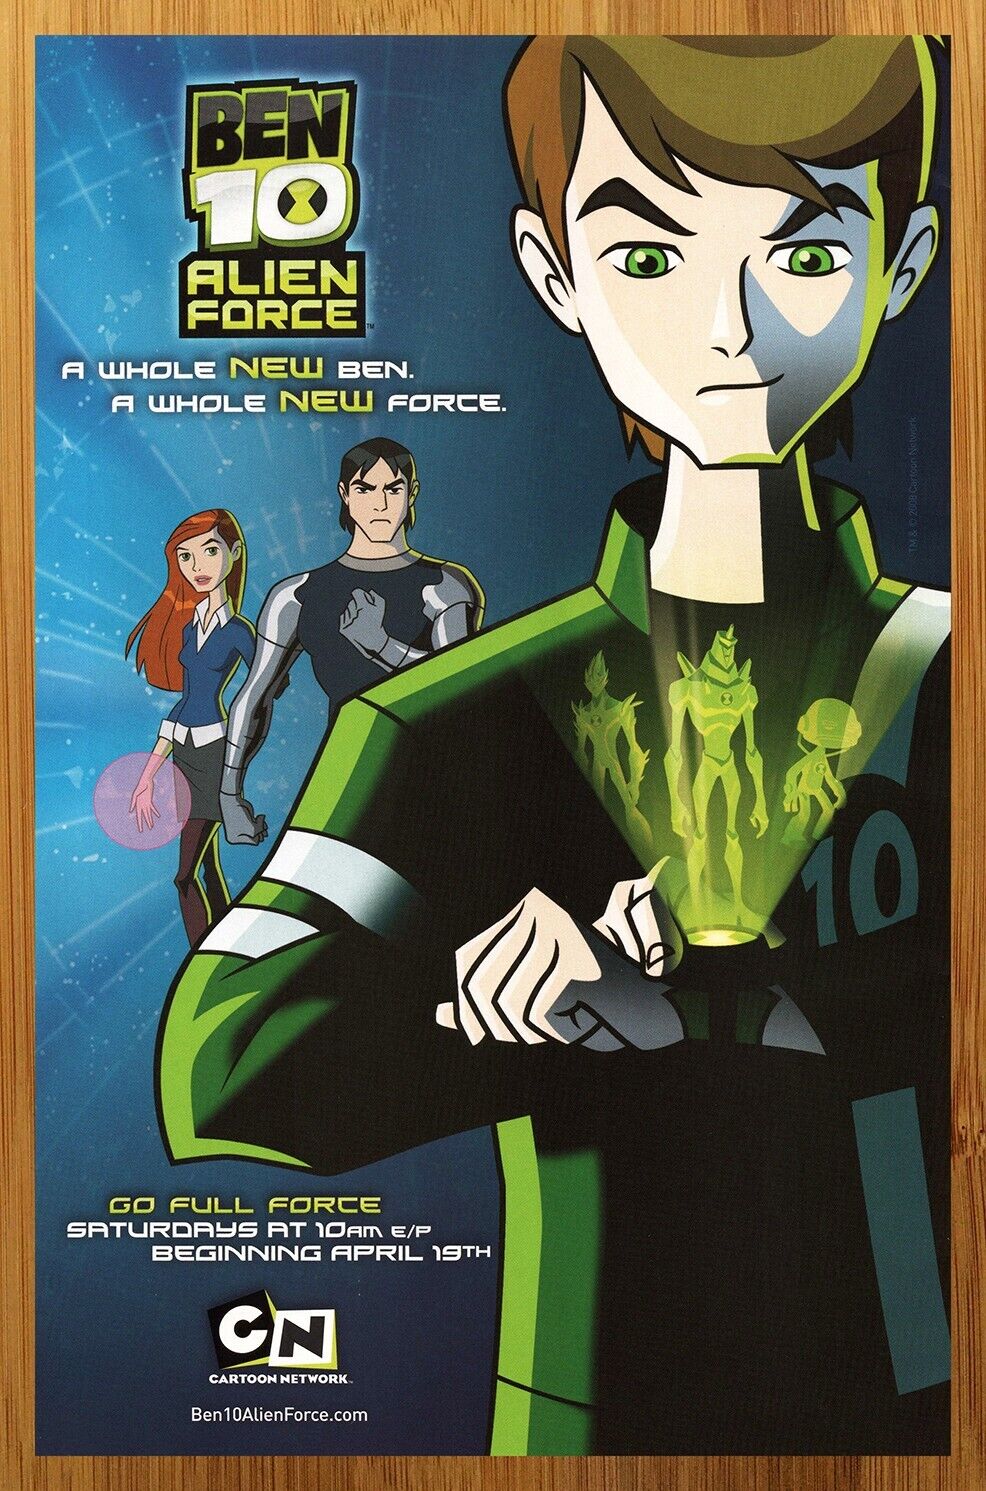 2008 Ben 10 Alien Force TV Series Print Ad/Poster Cartoon Network Show Promo Art